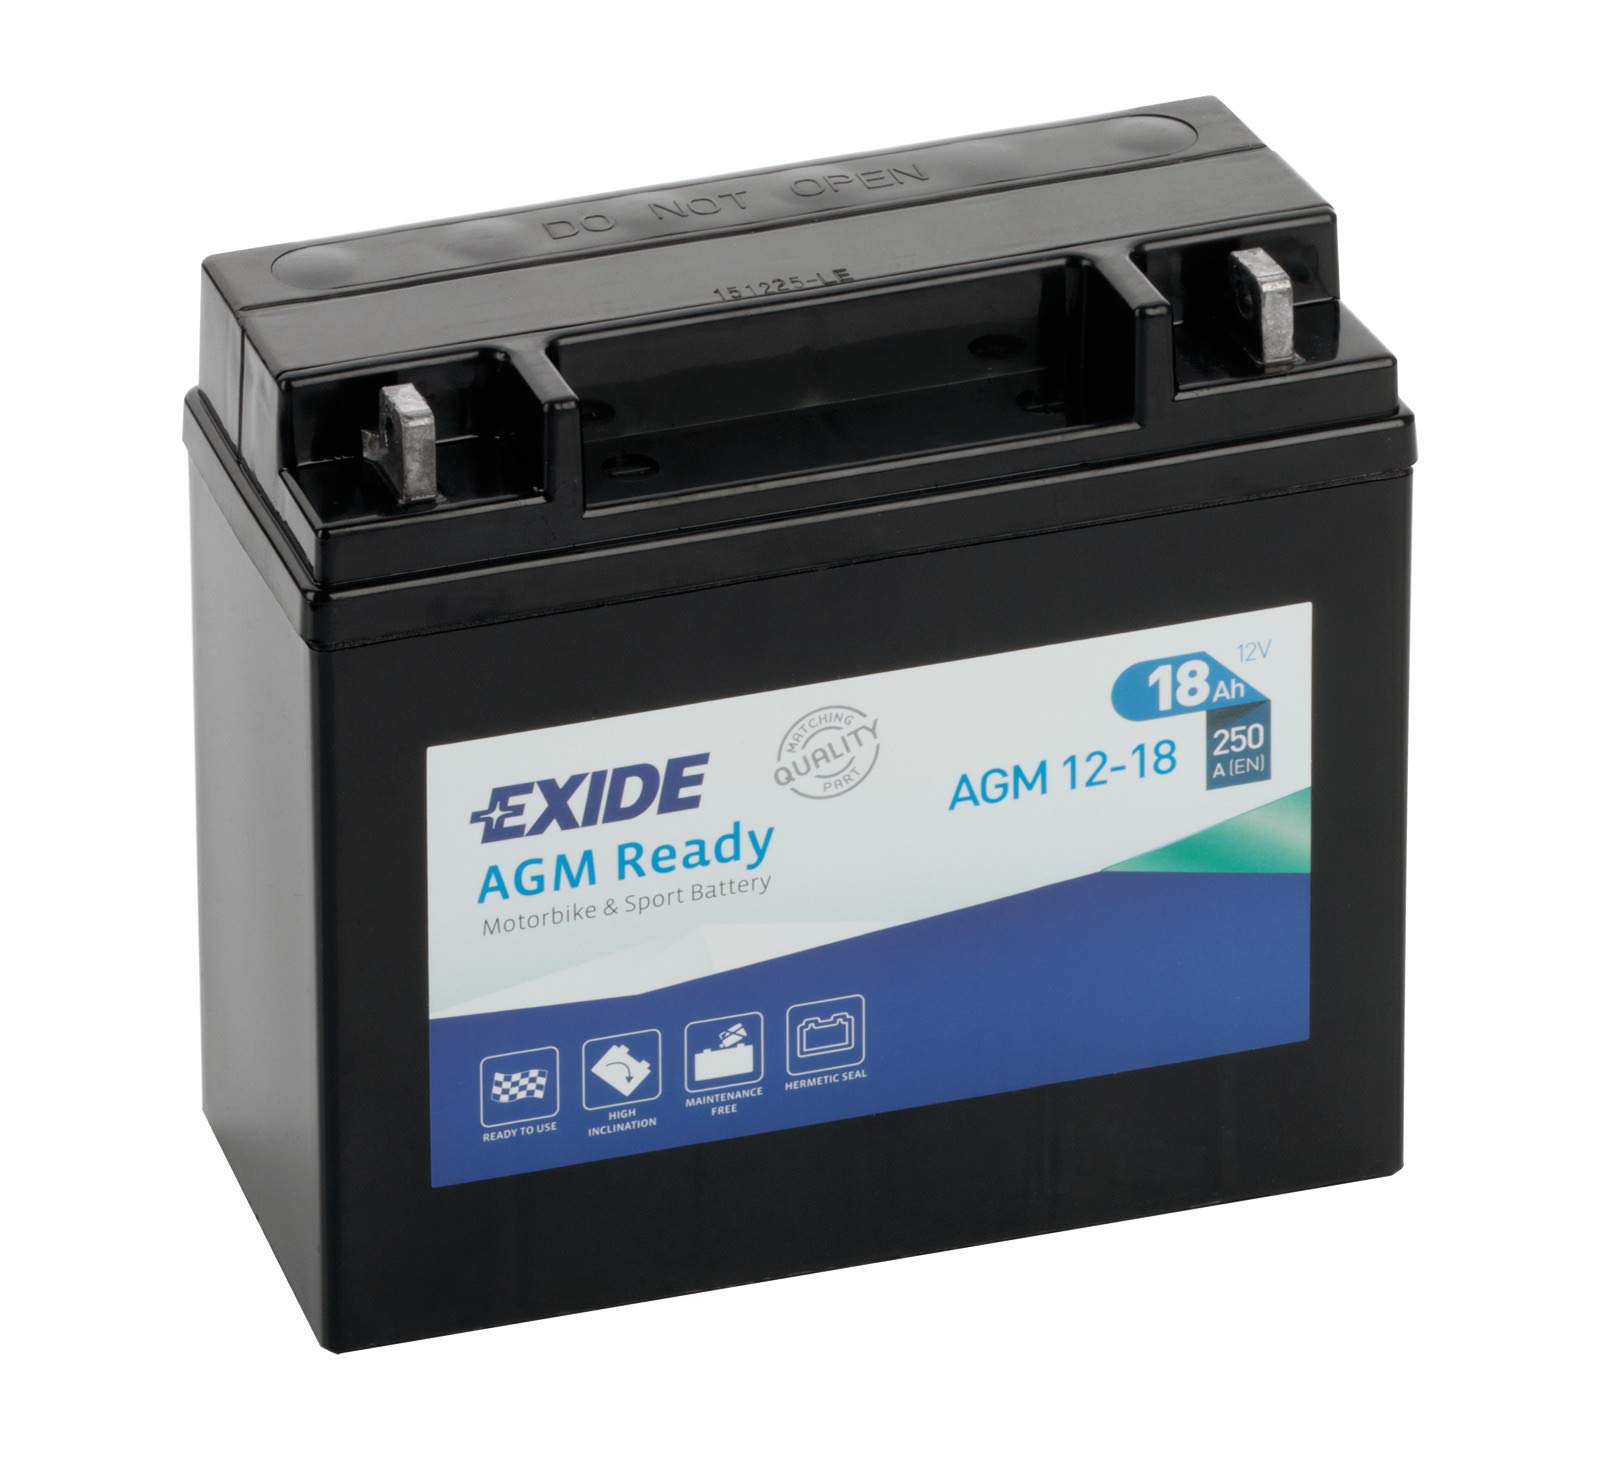 Exide AGM12-18 AGM-Ready Motorrad Starter-Batterie 12V 18Ah 250A von Exide